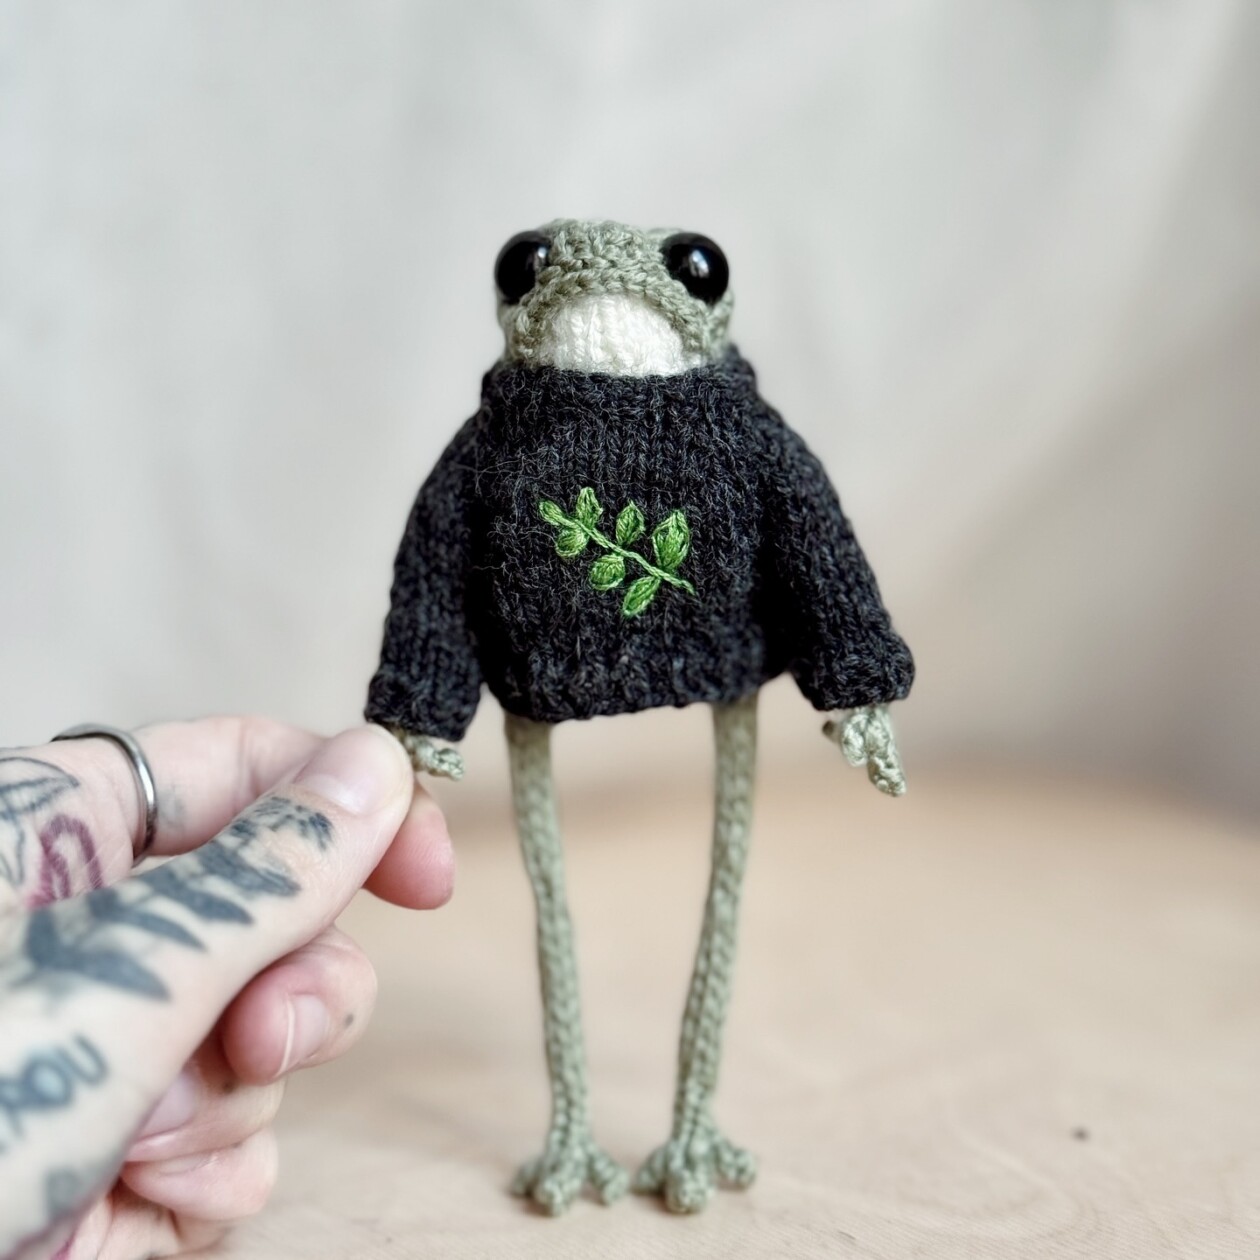 Enchanting Anthropomorphized Frog Crochet Patterns By Elliot (18)